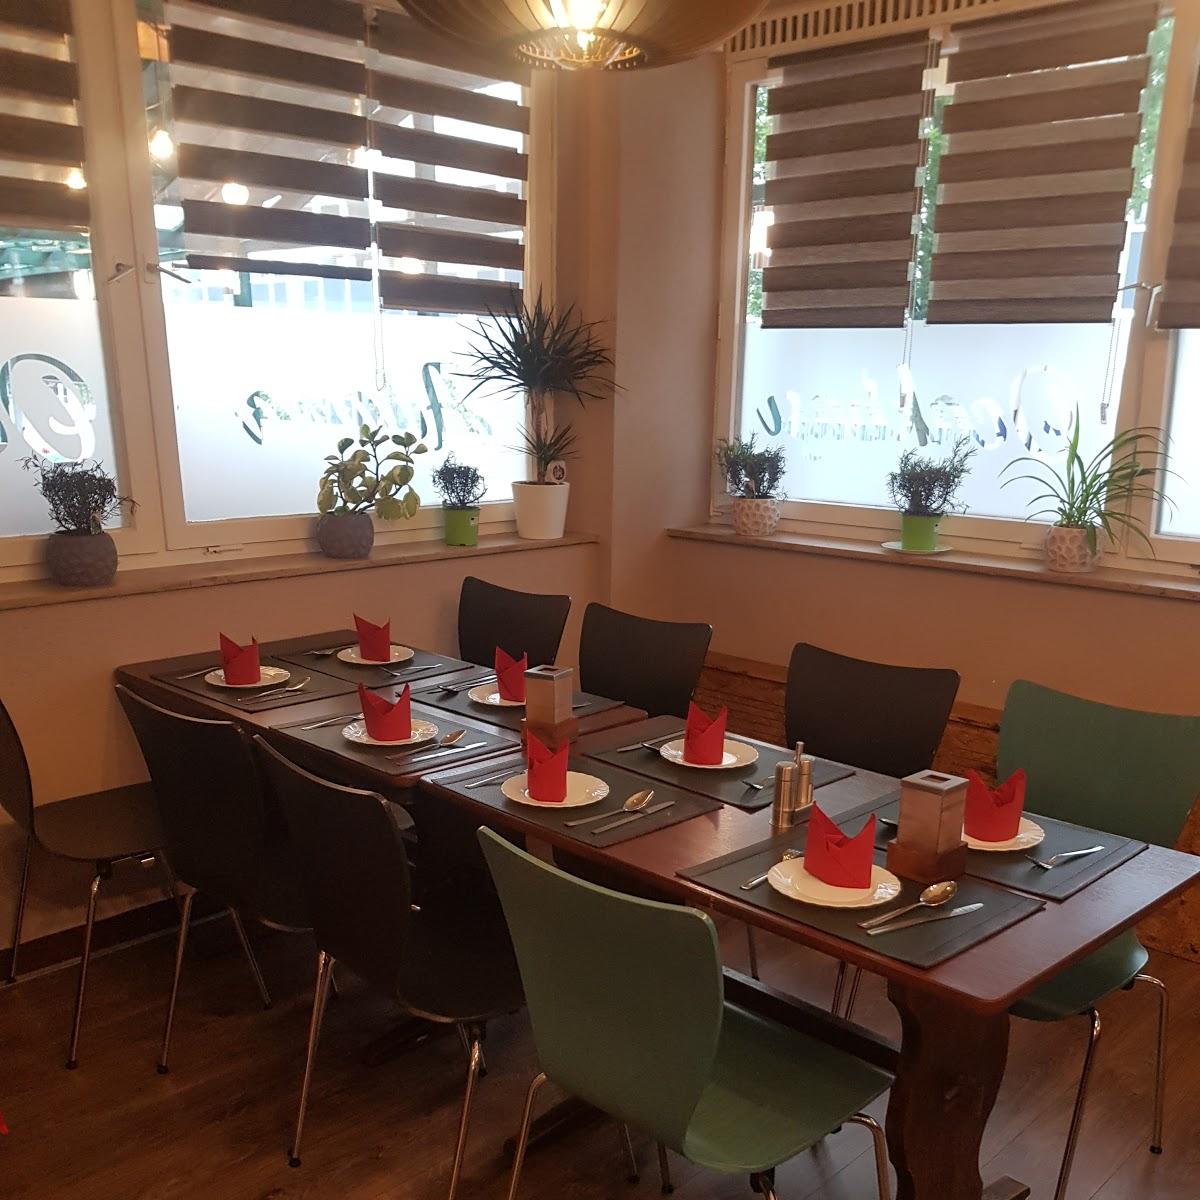 Restaurant "Adana Ocakbasi" in  Pforzheim